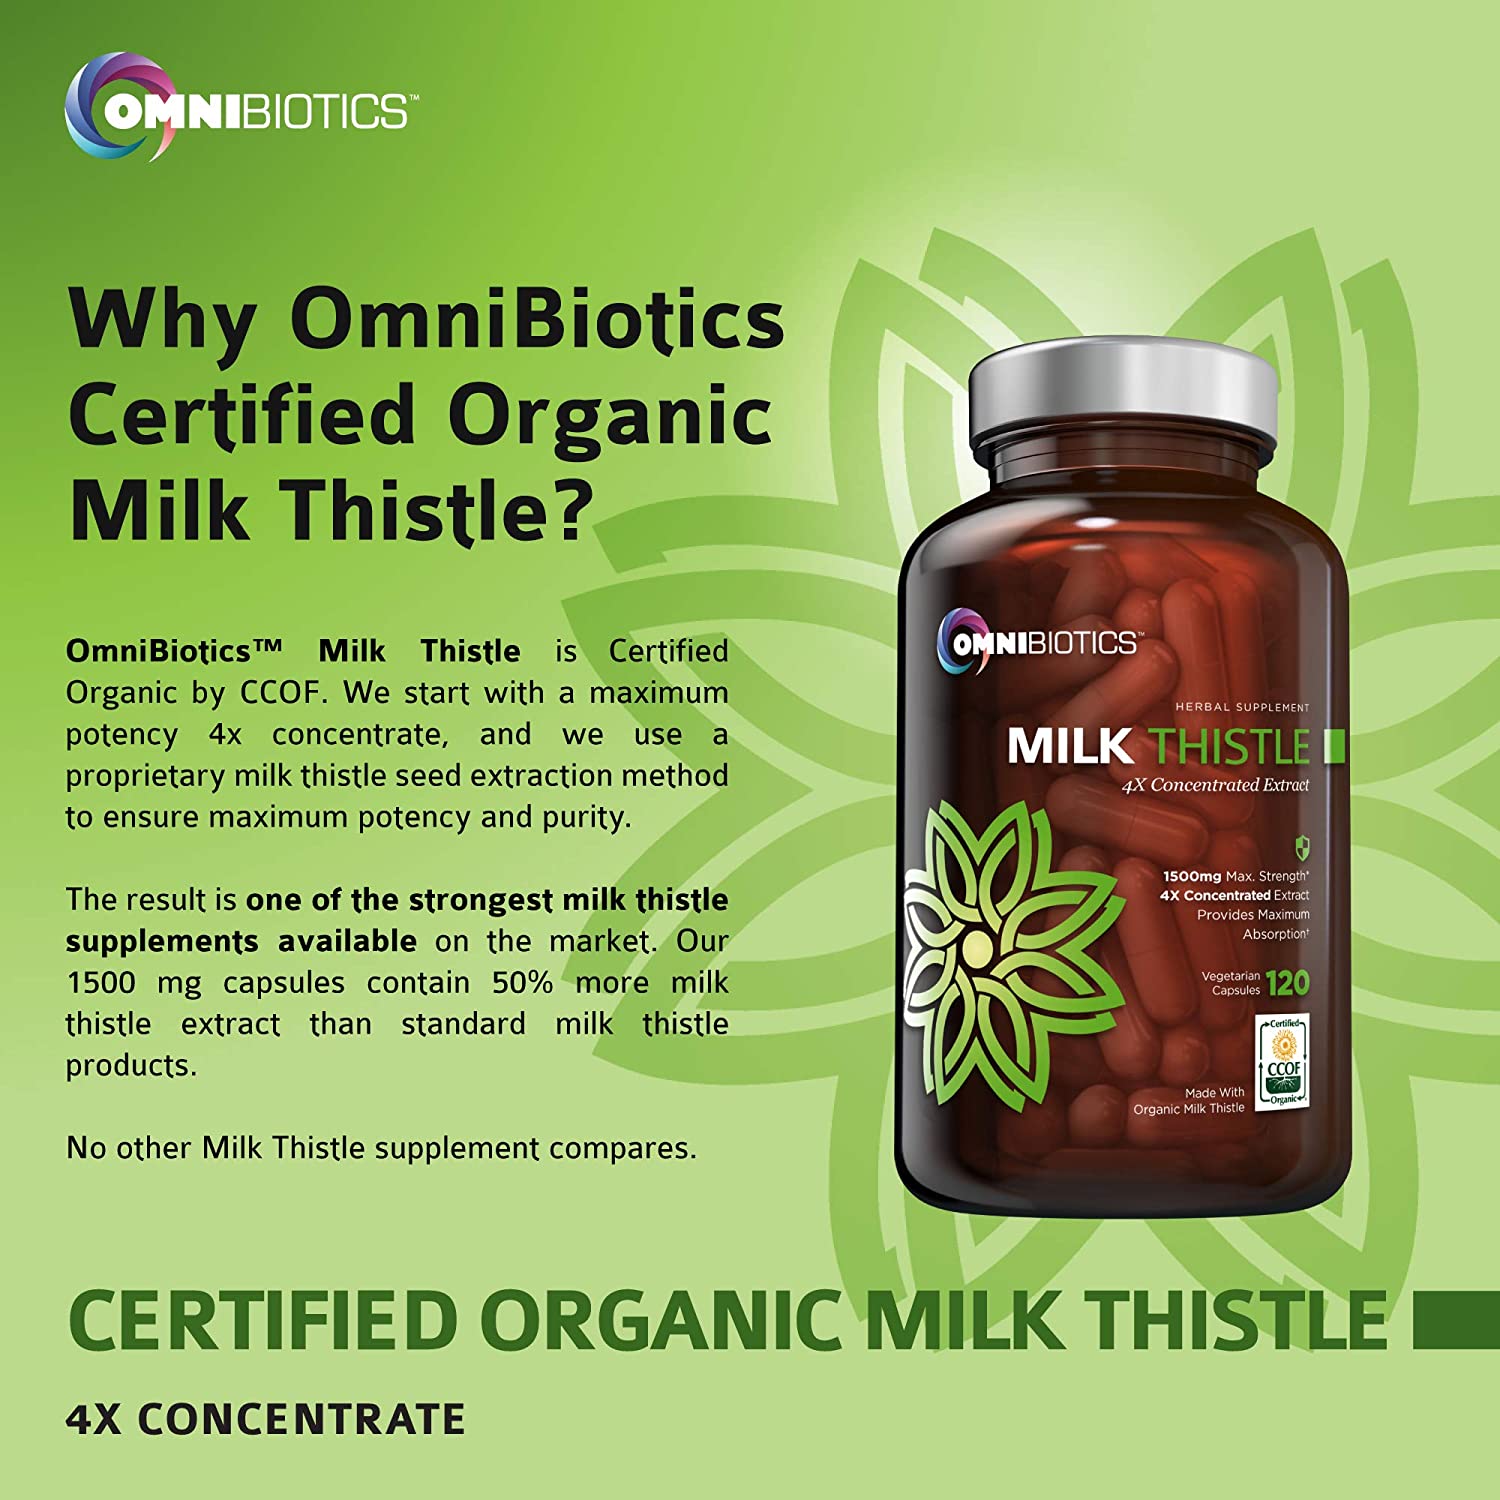 Certified Organic Milk Thistle